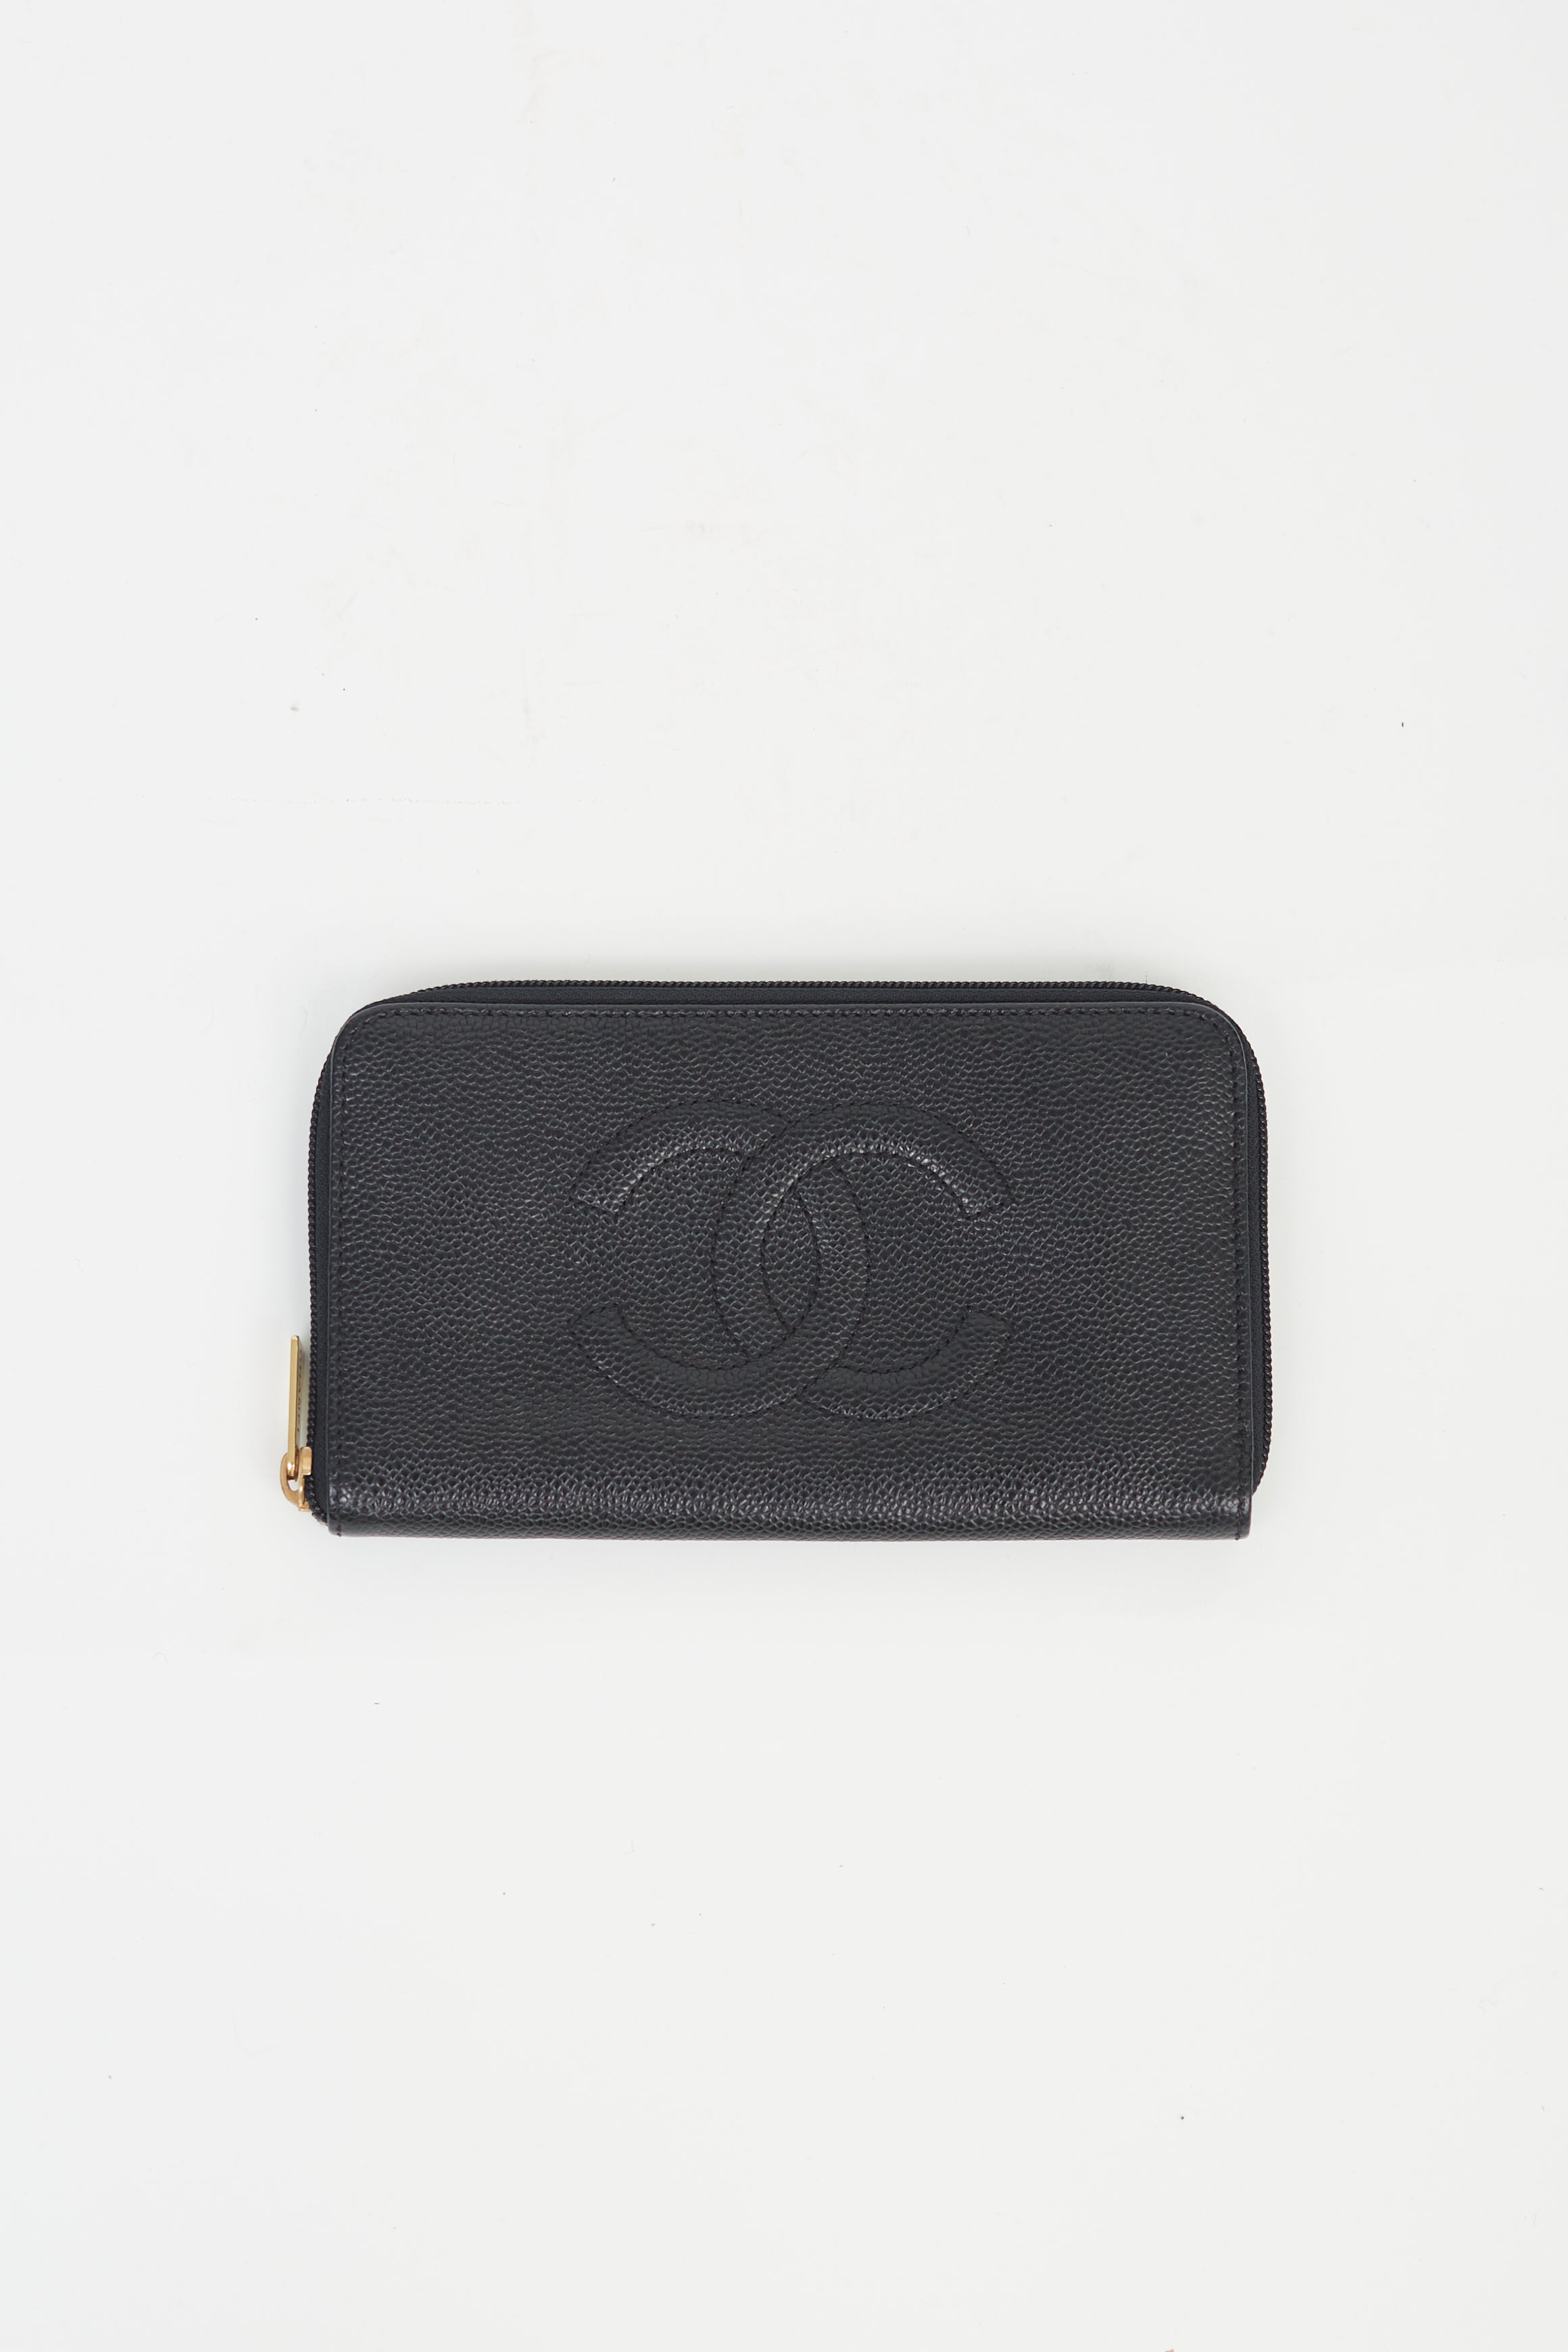 Chanel Zippy Card Holder in Black Caviar GHW